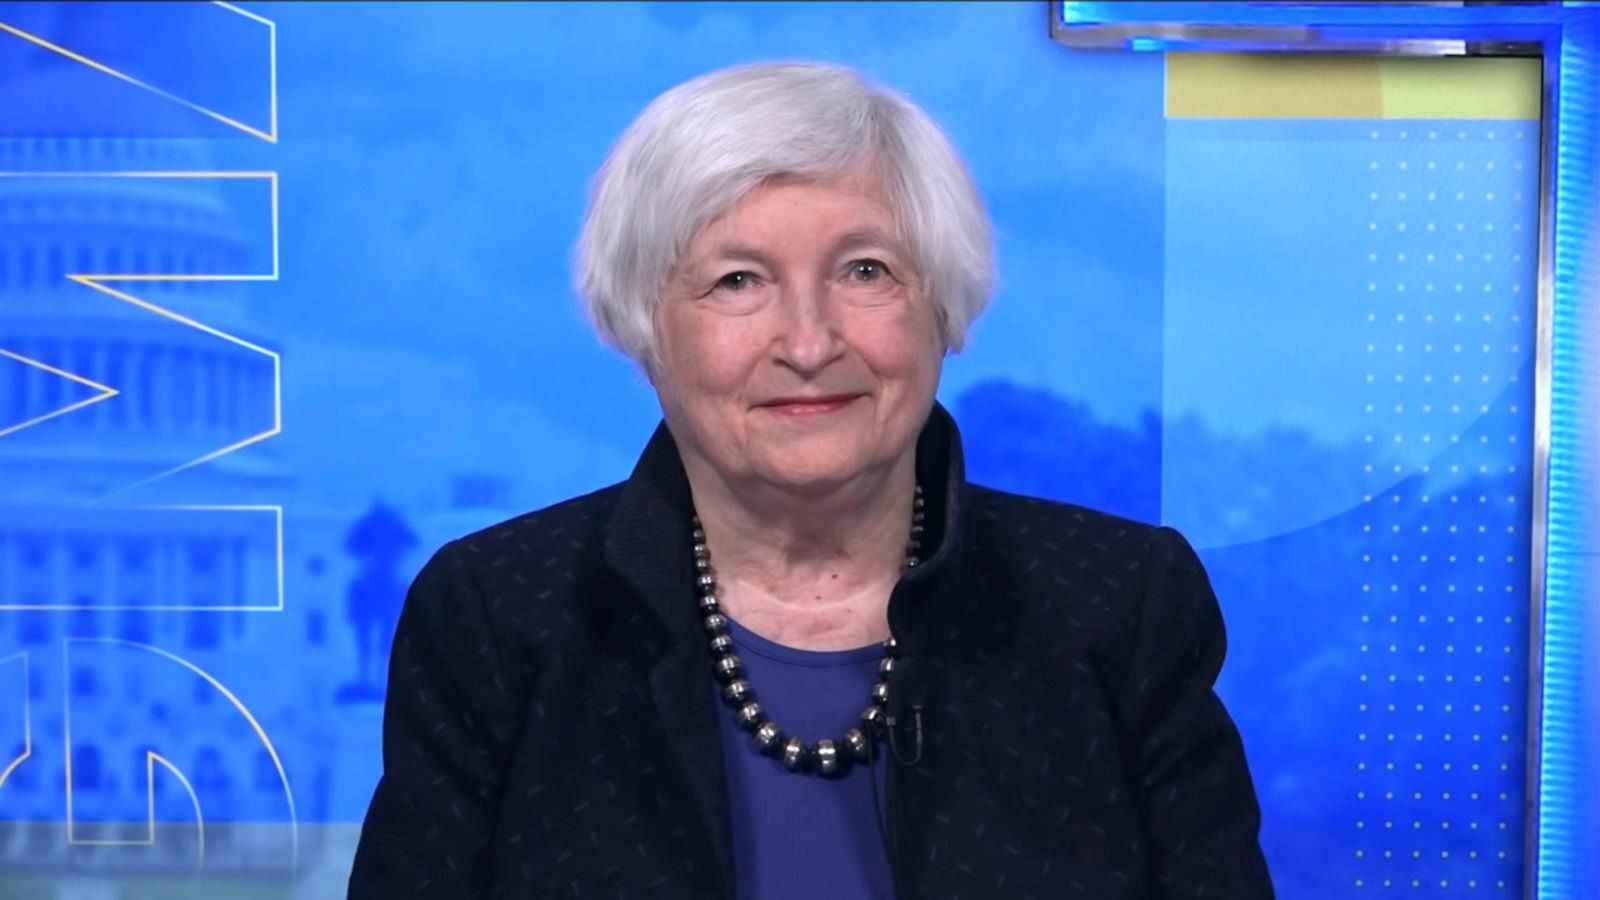 US Treasury Secretary Janet Yellen on recession fears, inflation